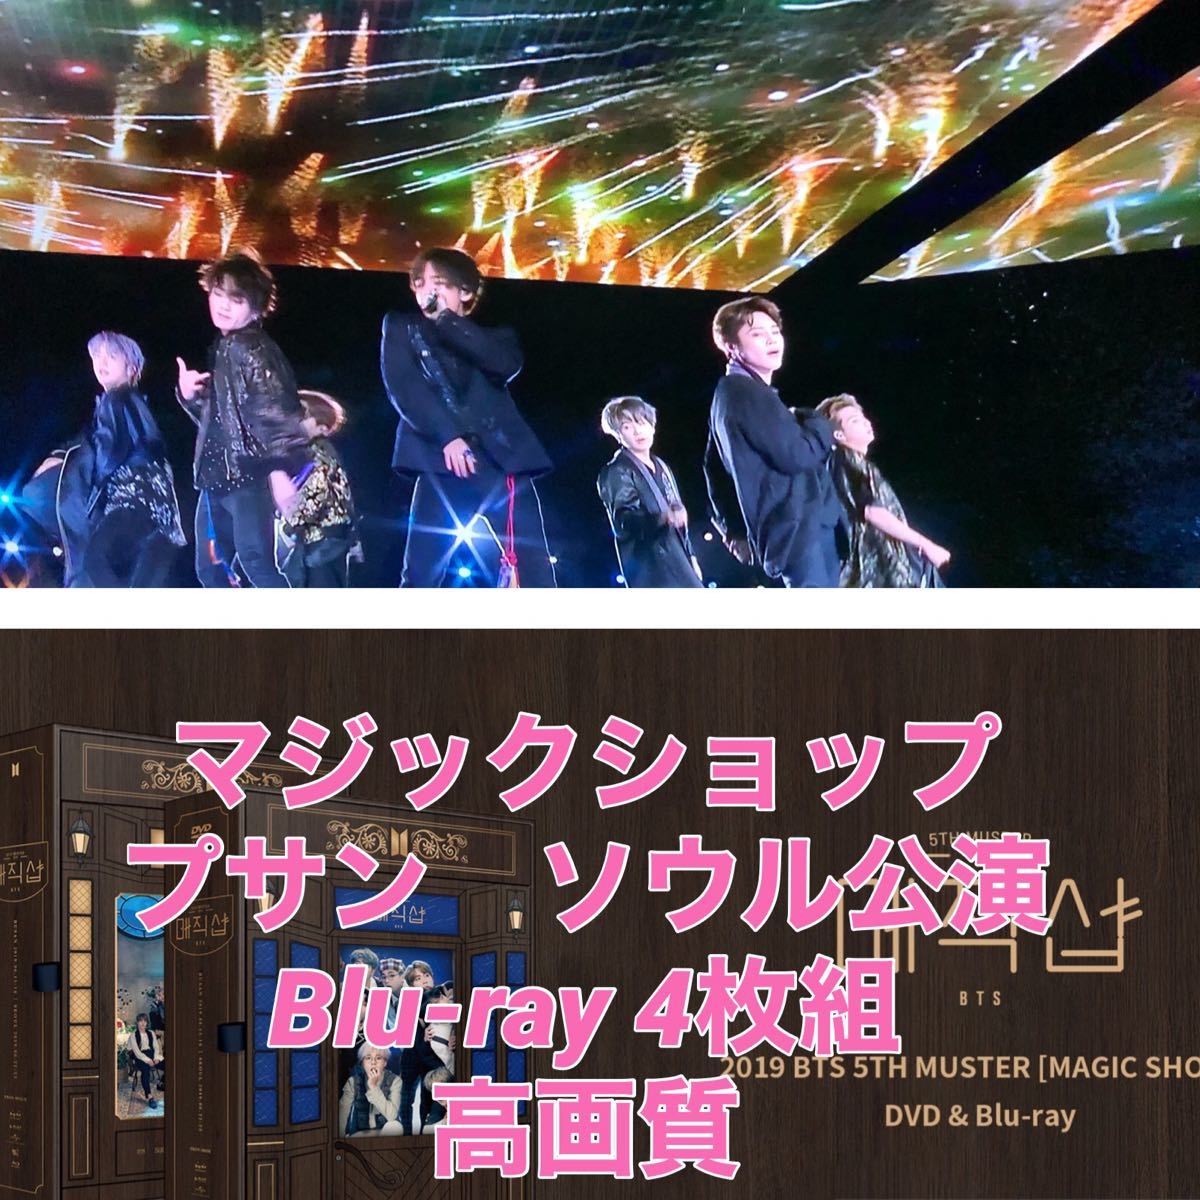 BTS MAGIC SHOP 釜山 ソウル公演 Blu-ray 通販 weekend.fm